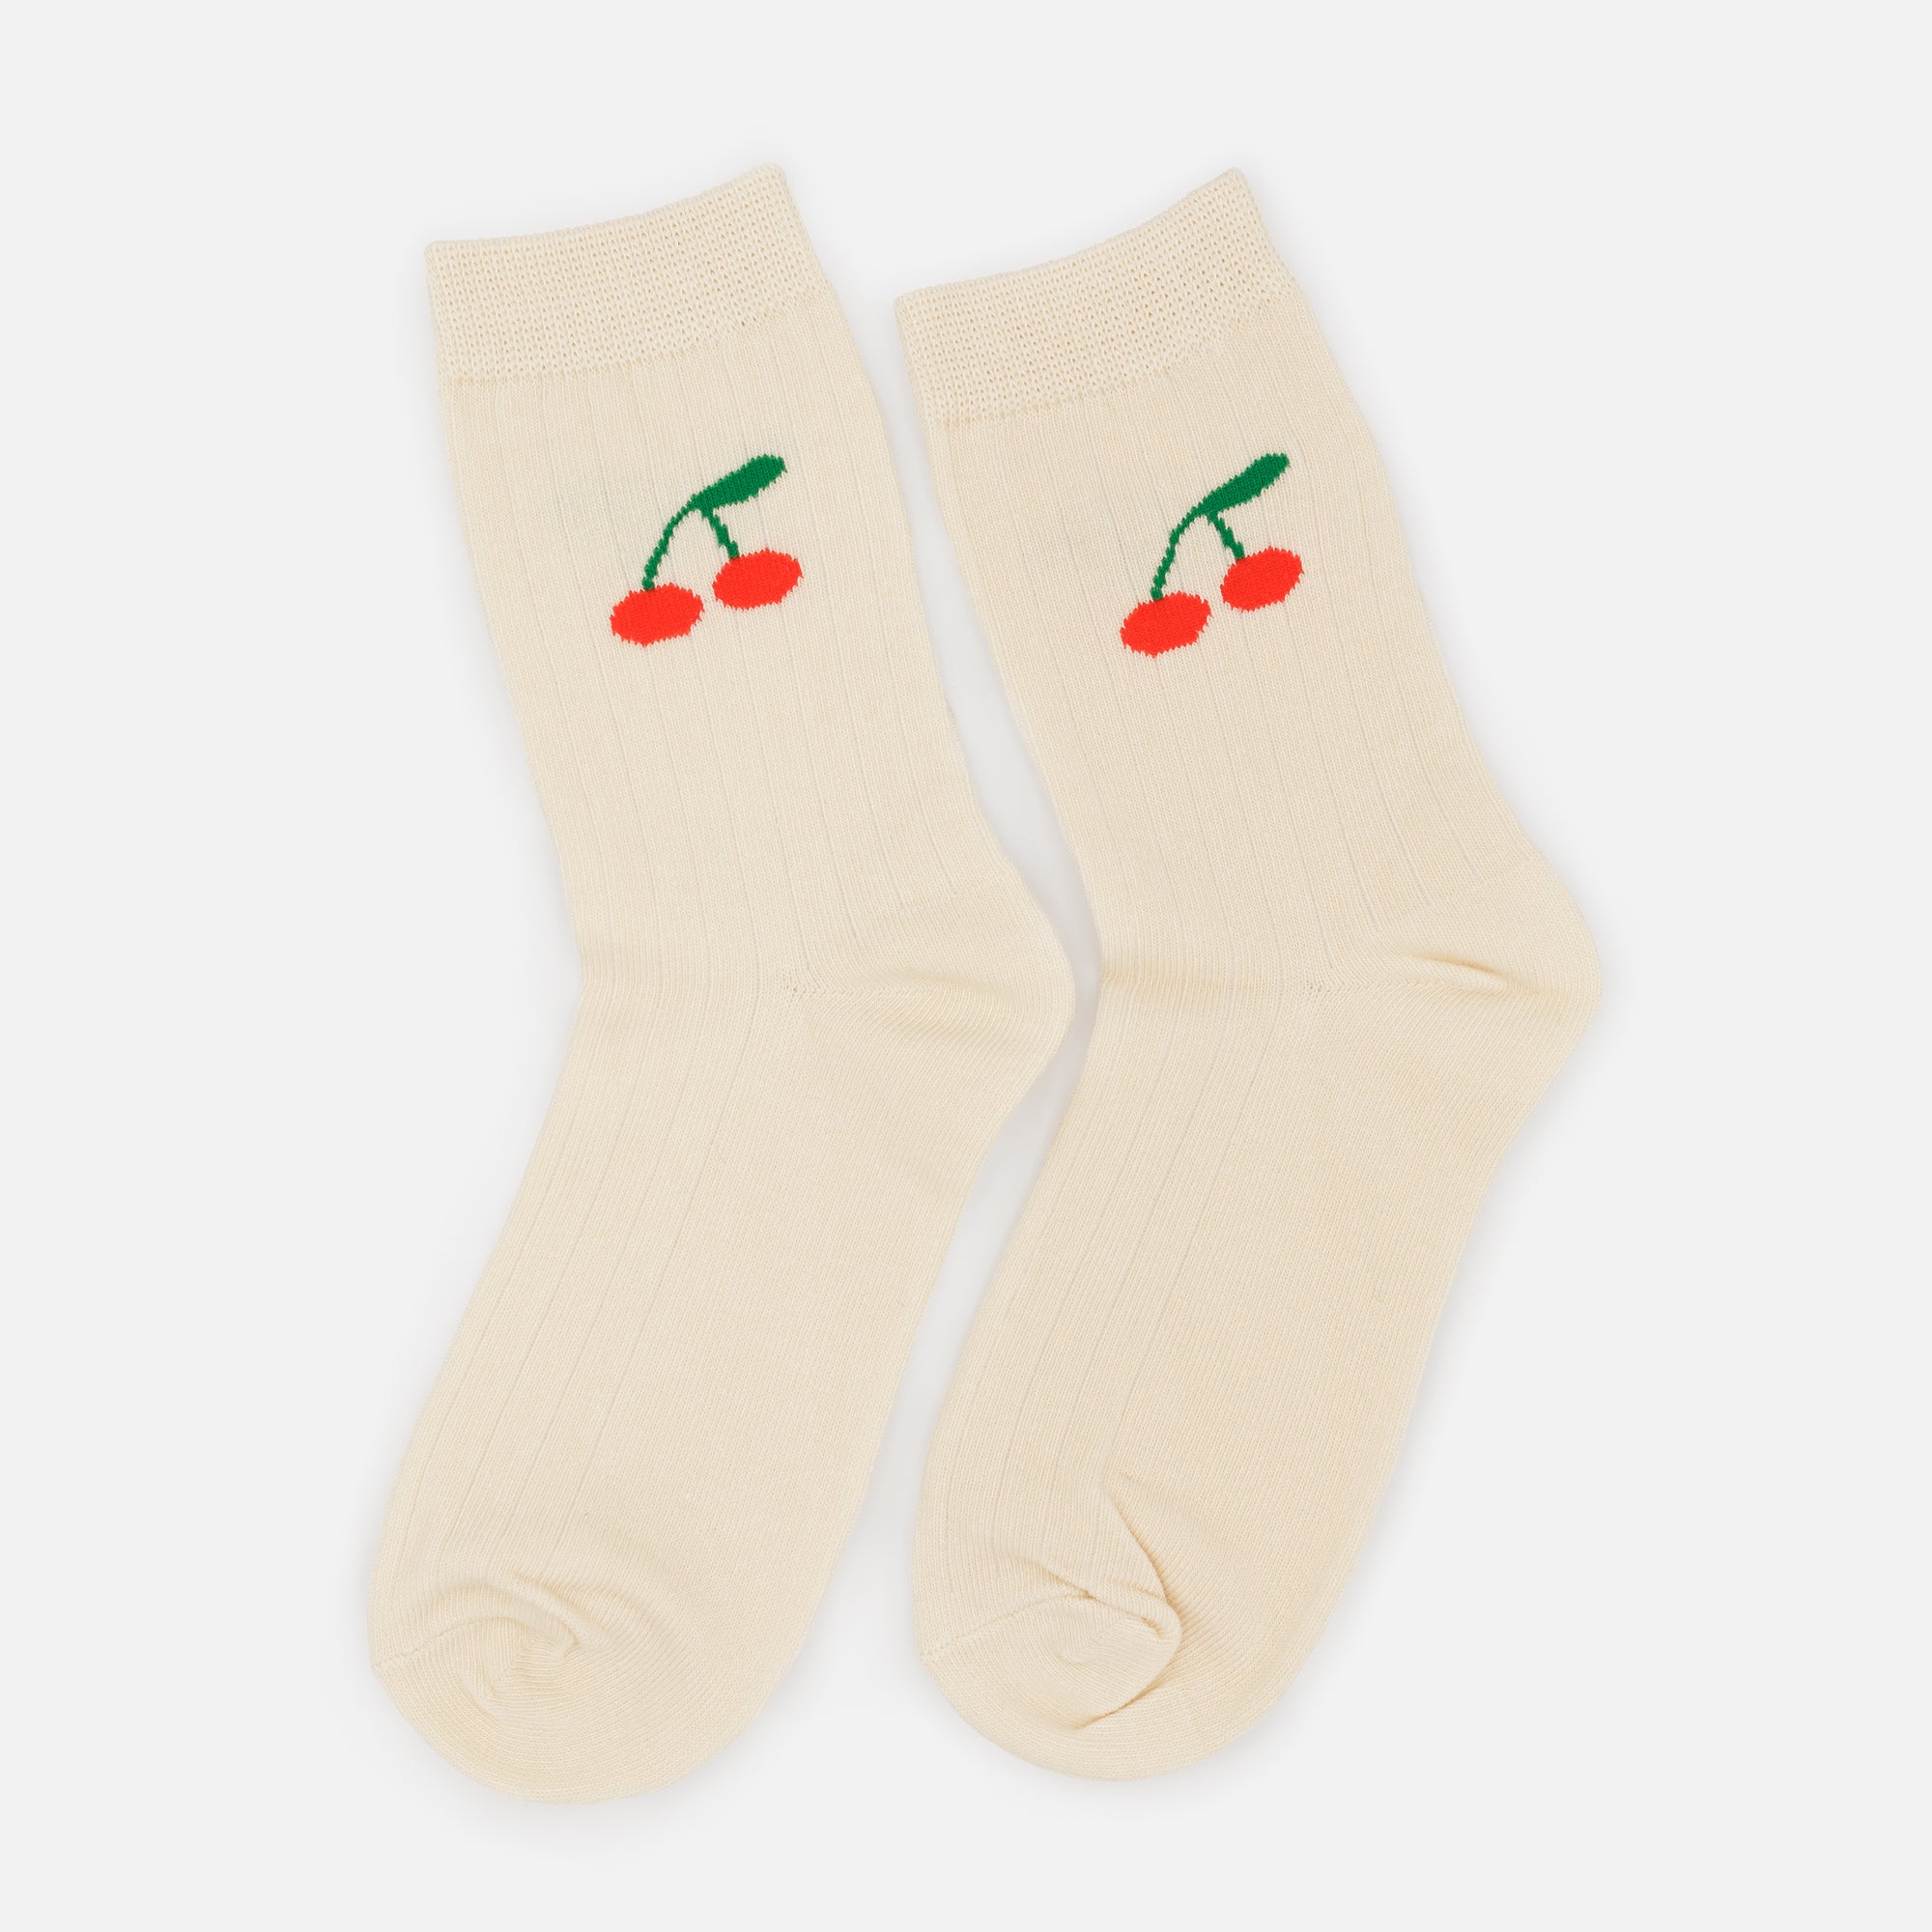 Cream ribbed socks with cherries